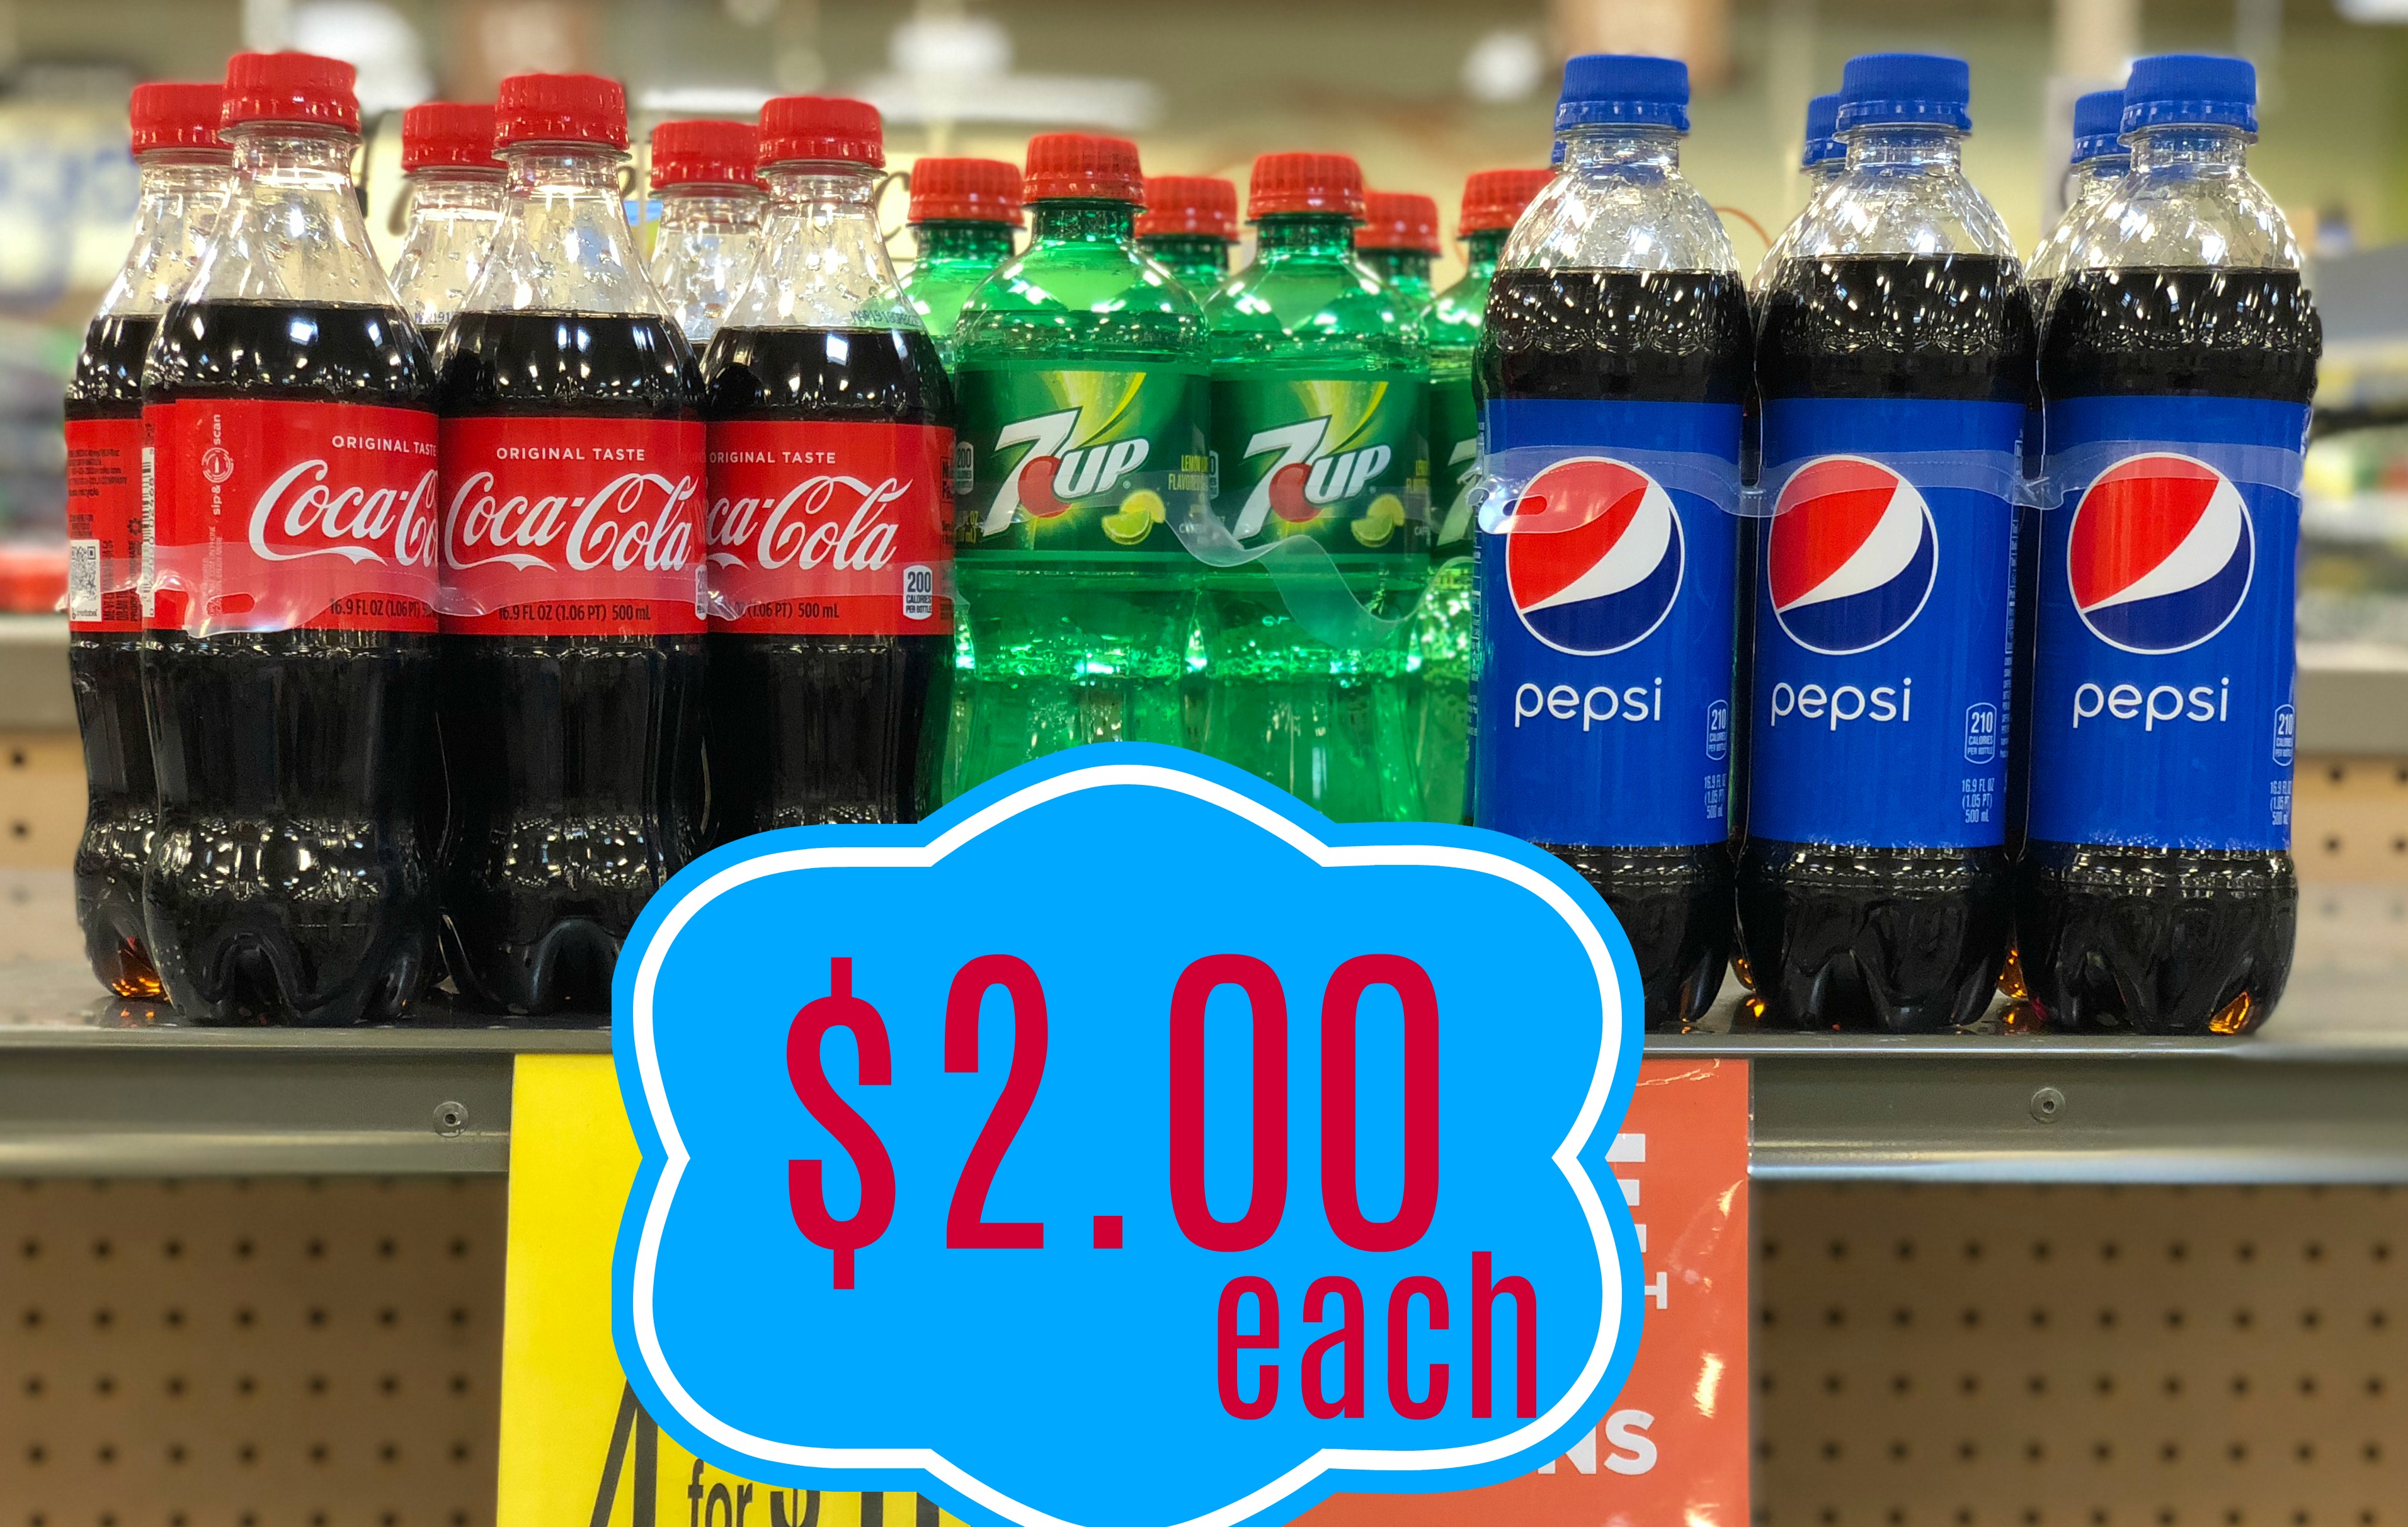 Pay Only 2 00 Each For Coke 7up And Pepsi 6 Pack Bottles At Kroger Kroger Krazy